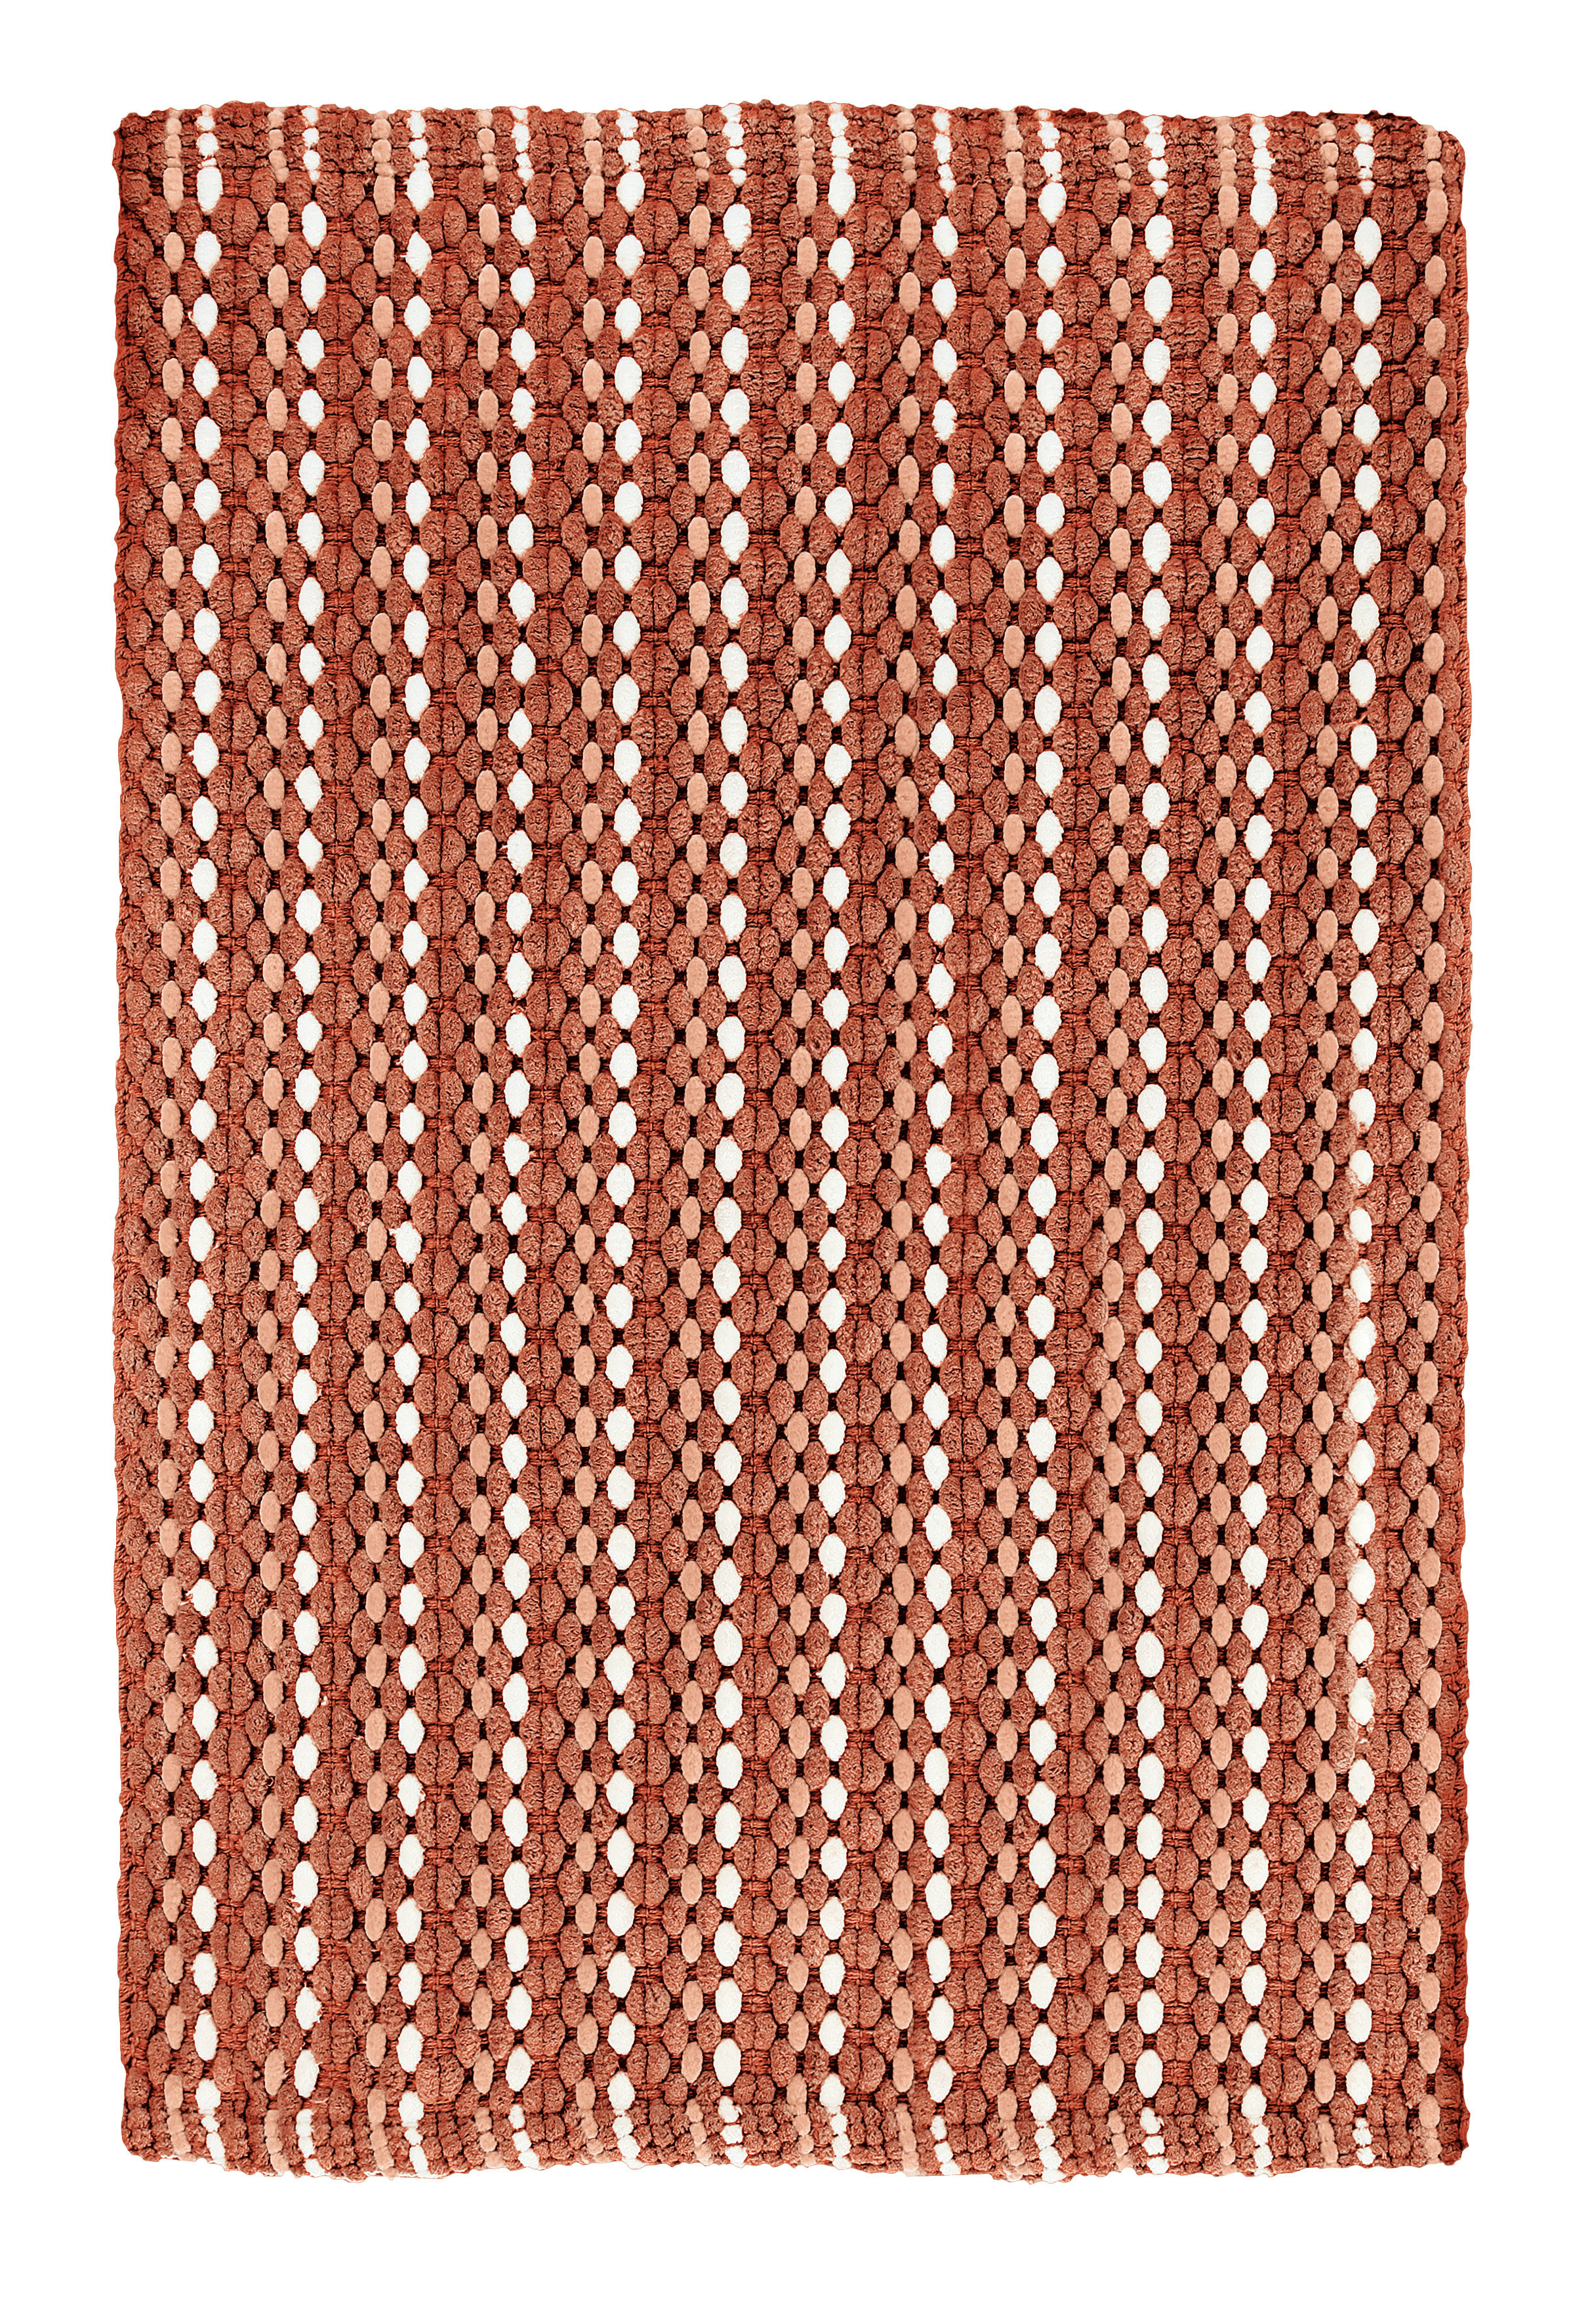 Badteppich Loop, Terracotta, 70x120 cm